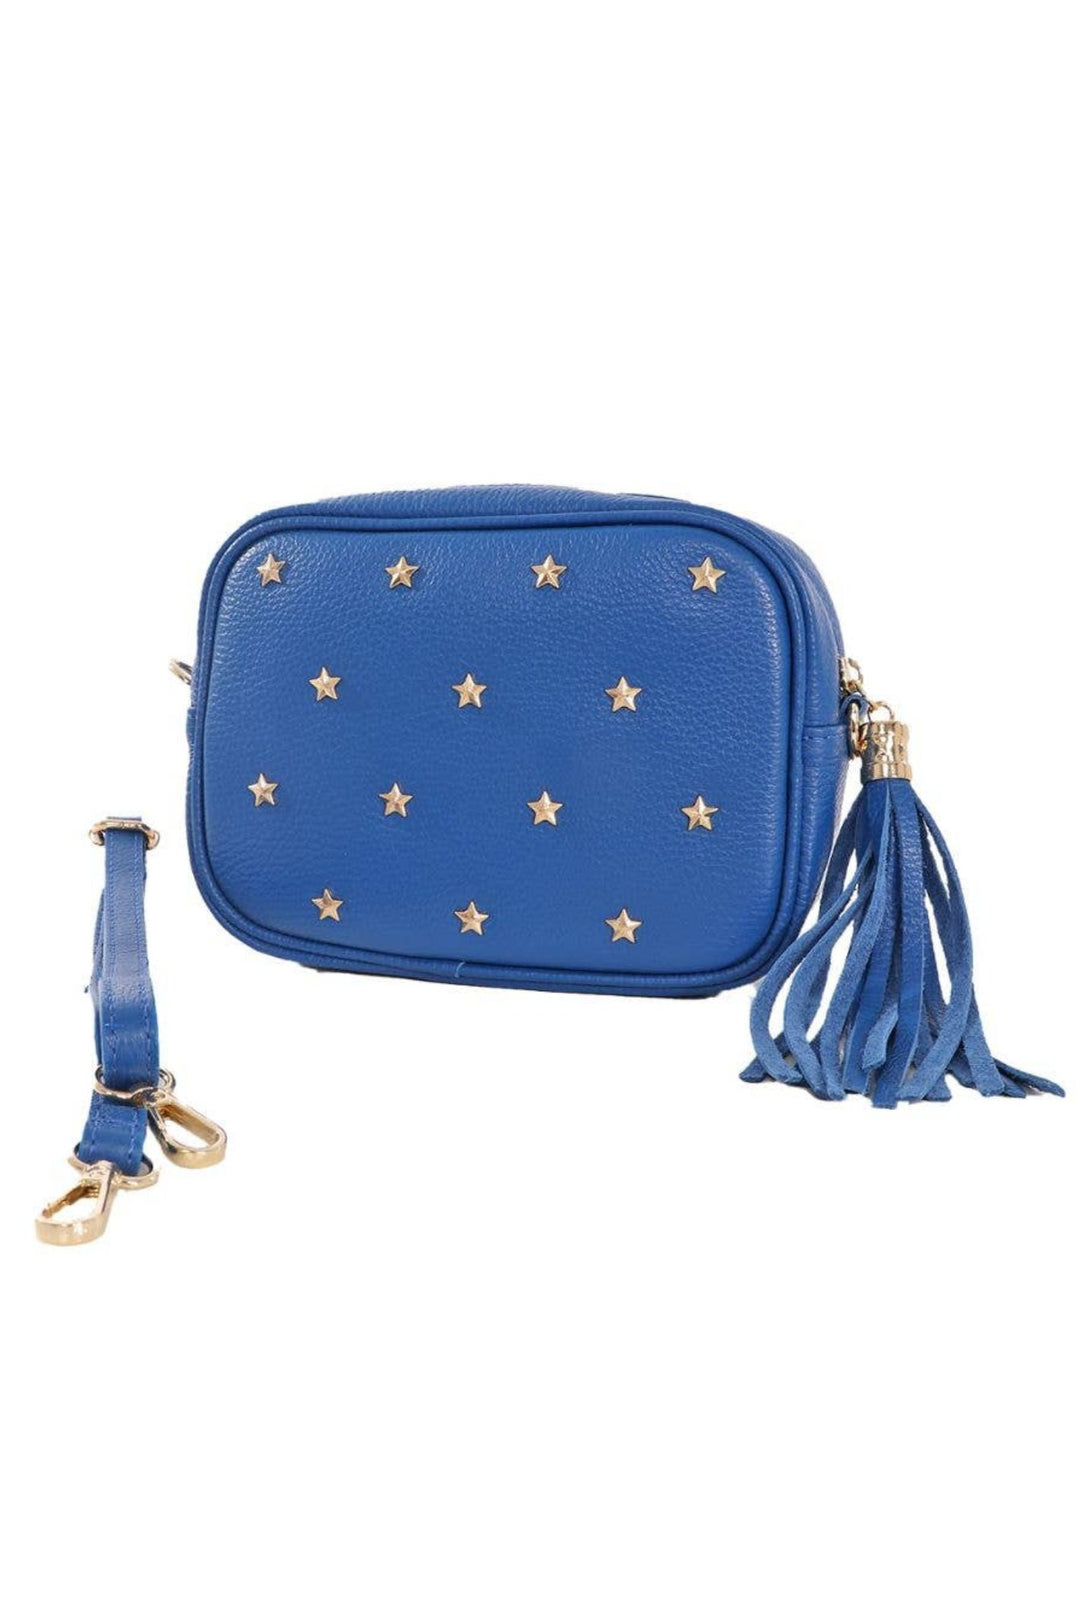 Royal Blue Leather Star Studded Camera Bag